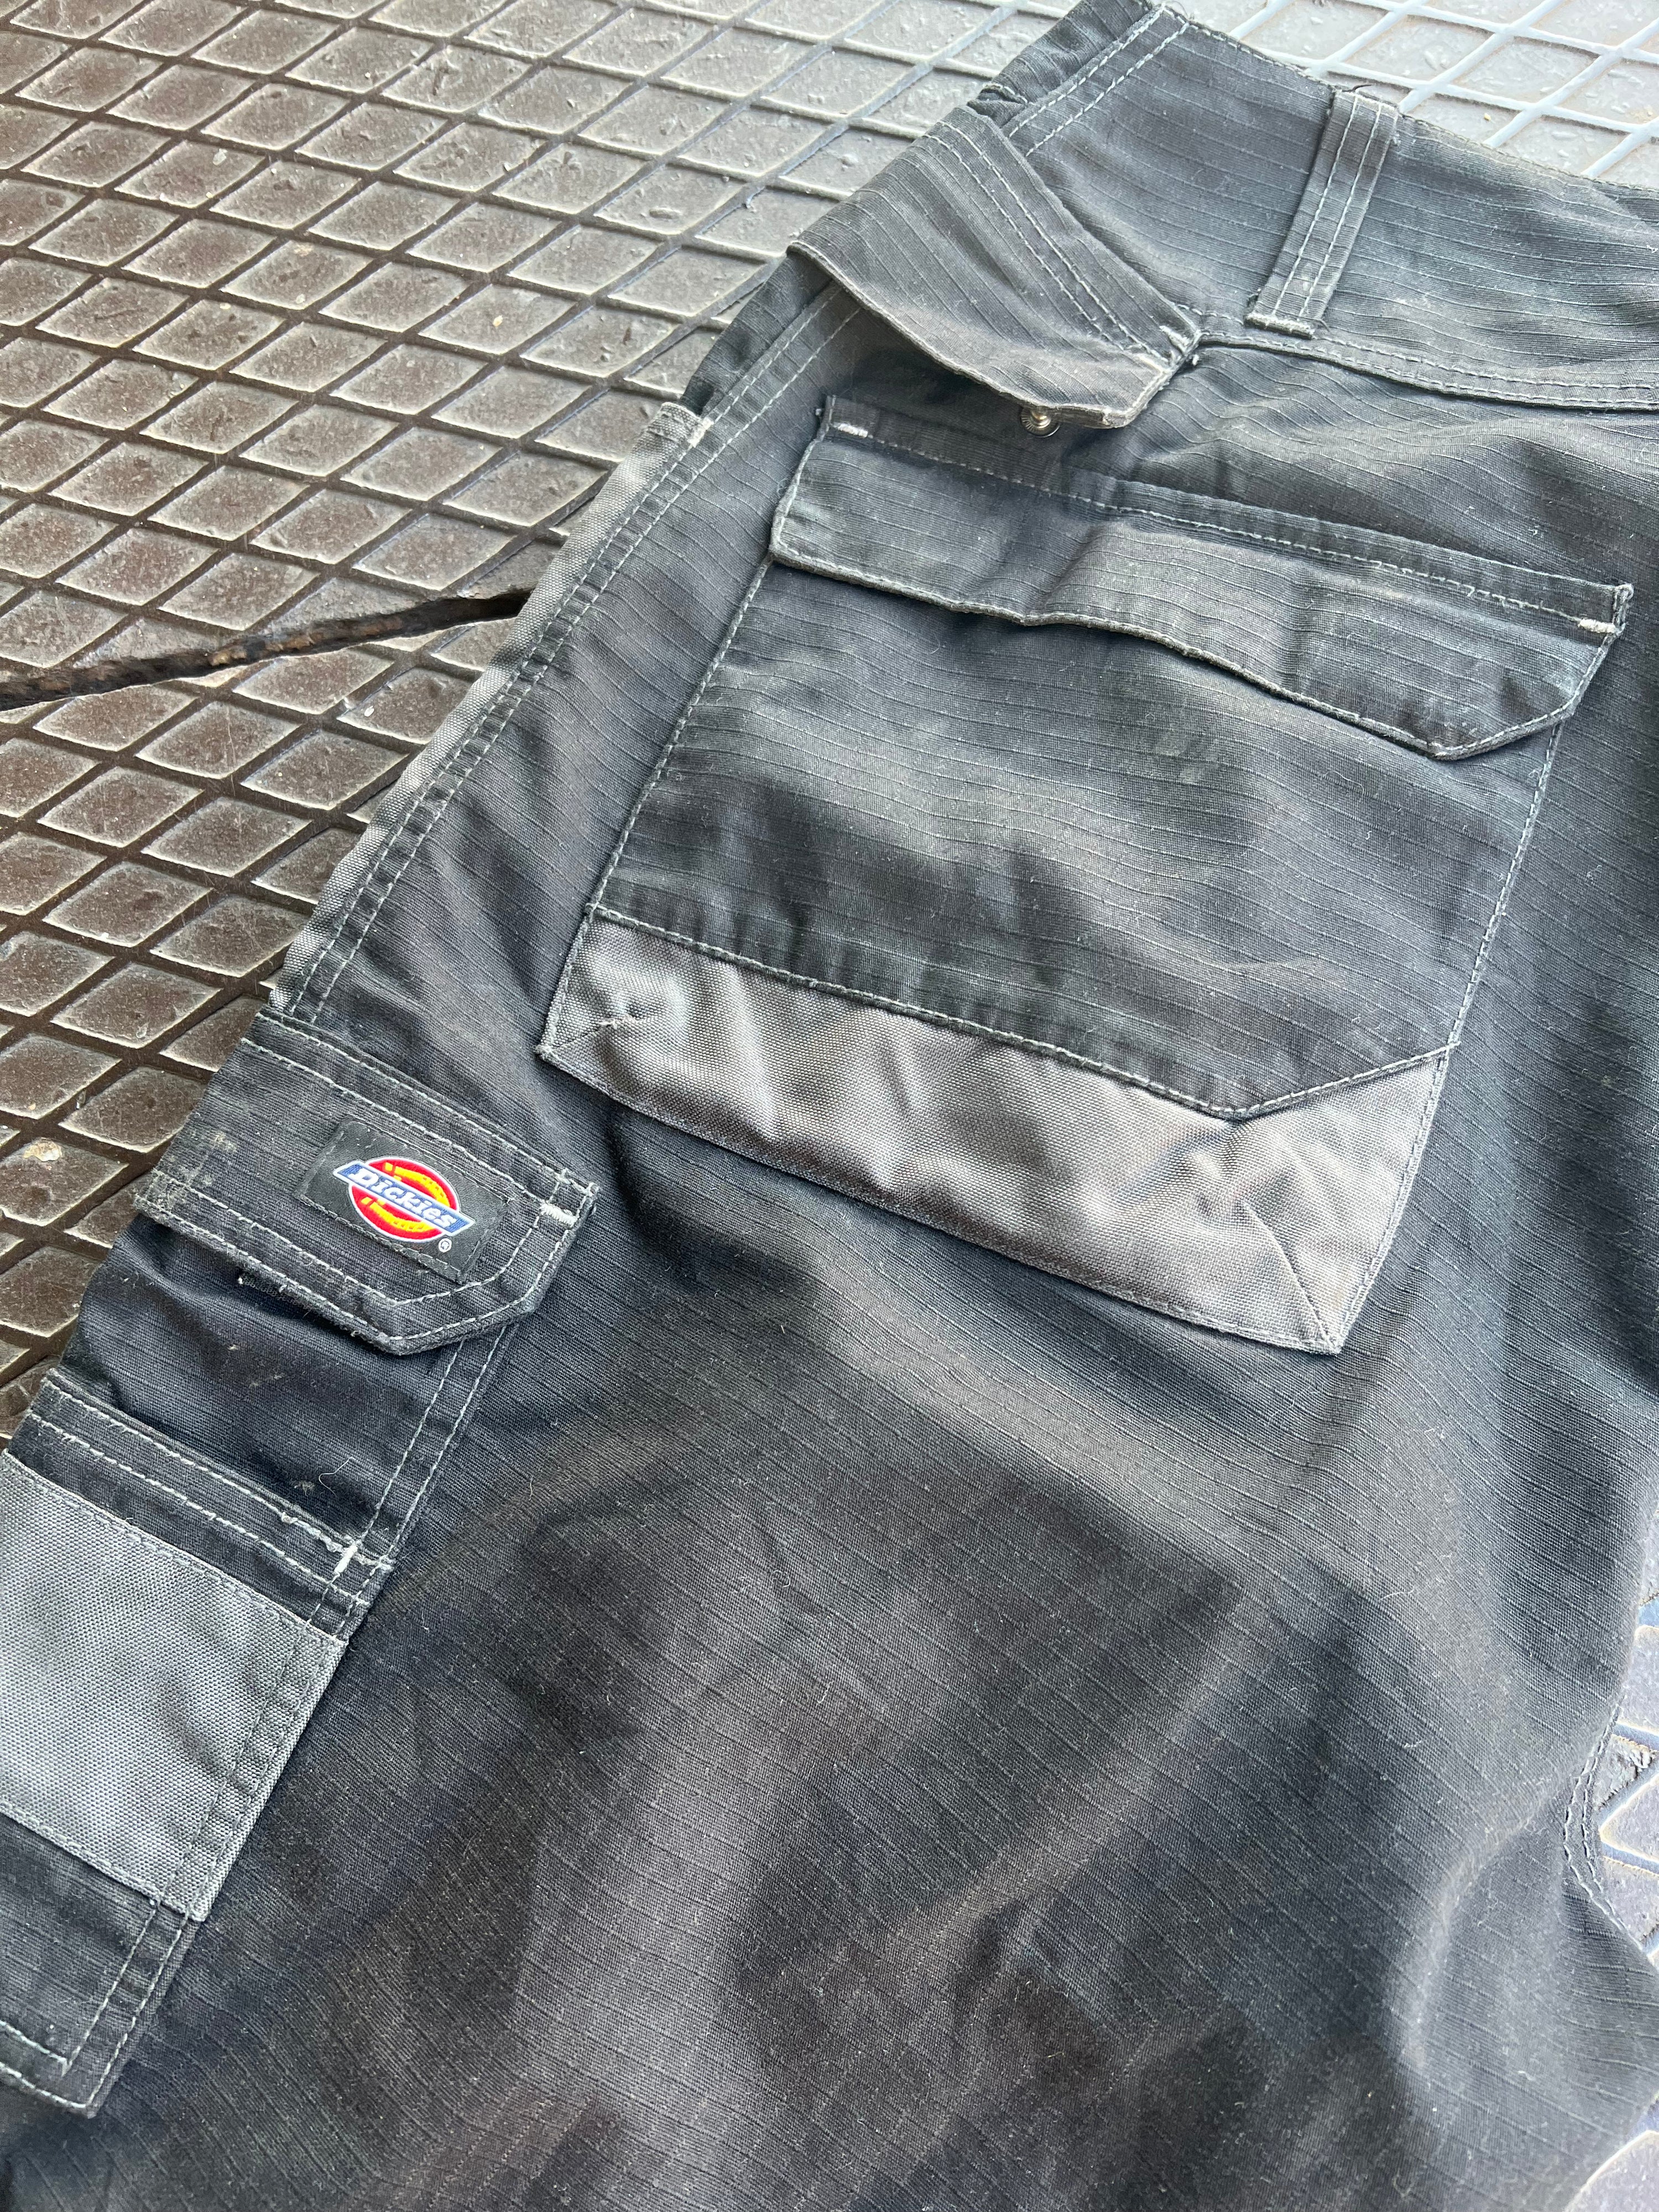 36 - Dickies Cordura Cargo Shorts Black/Grey Accents